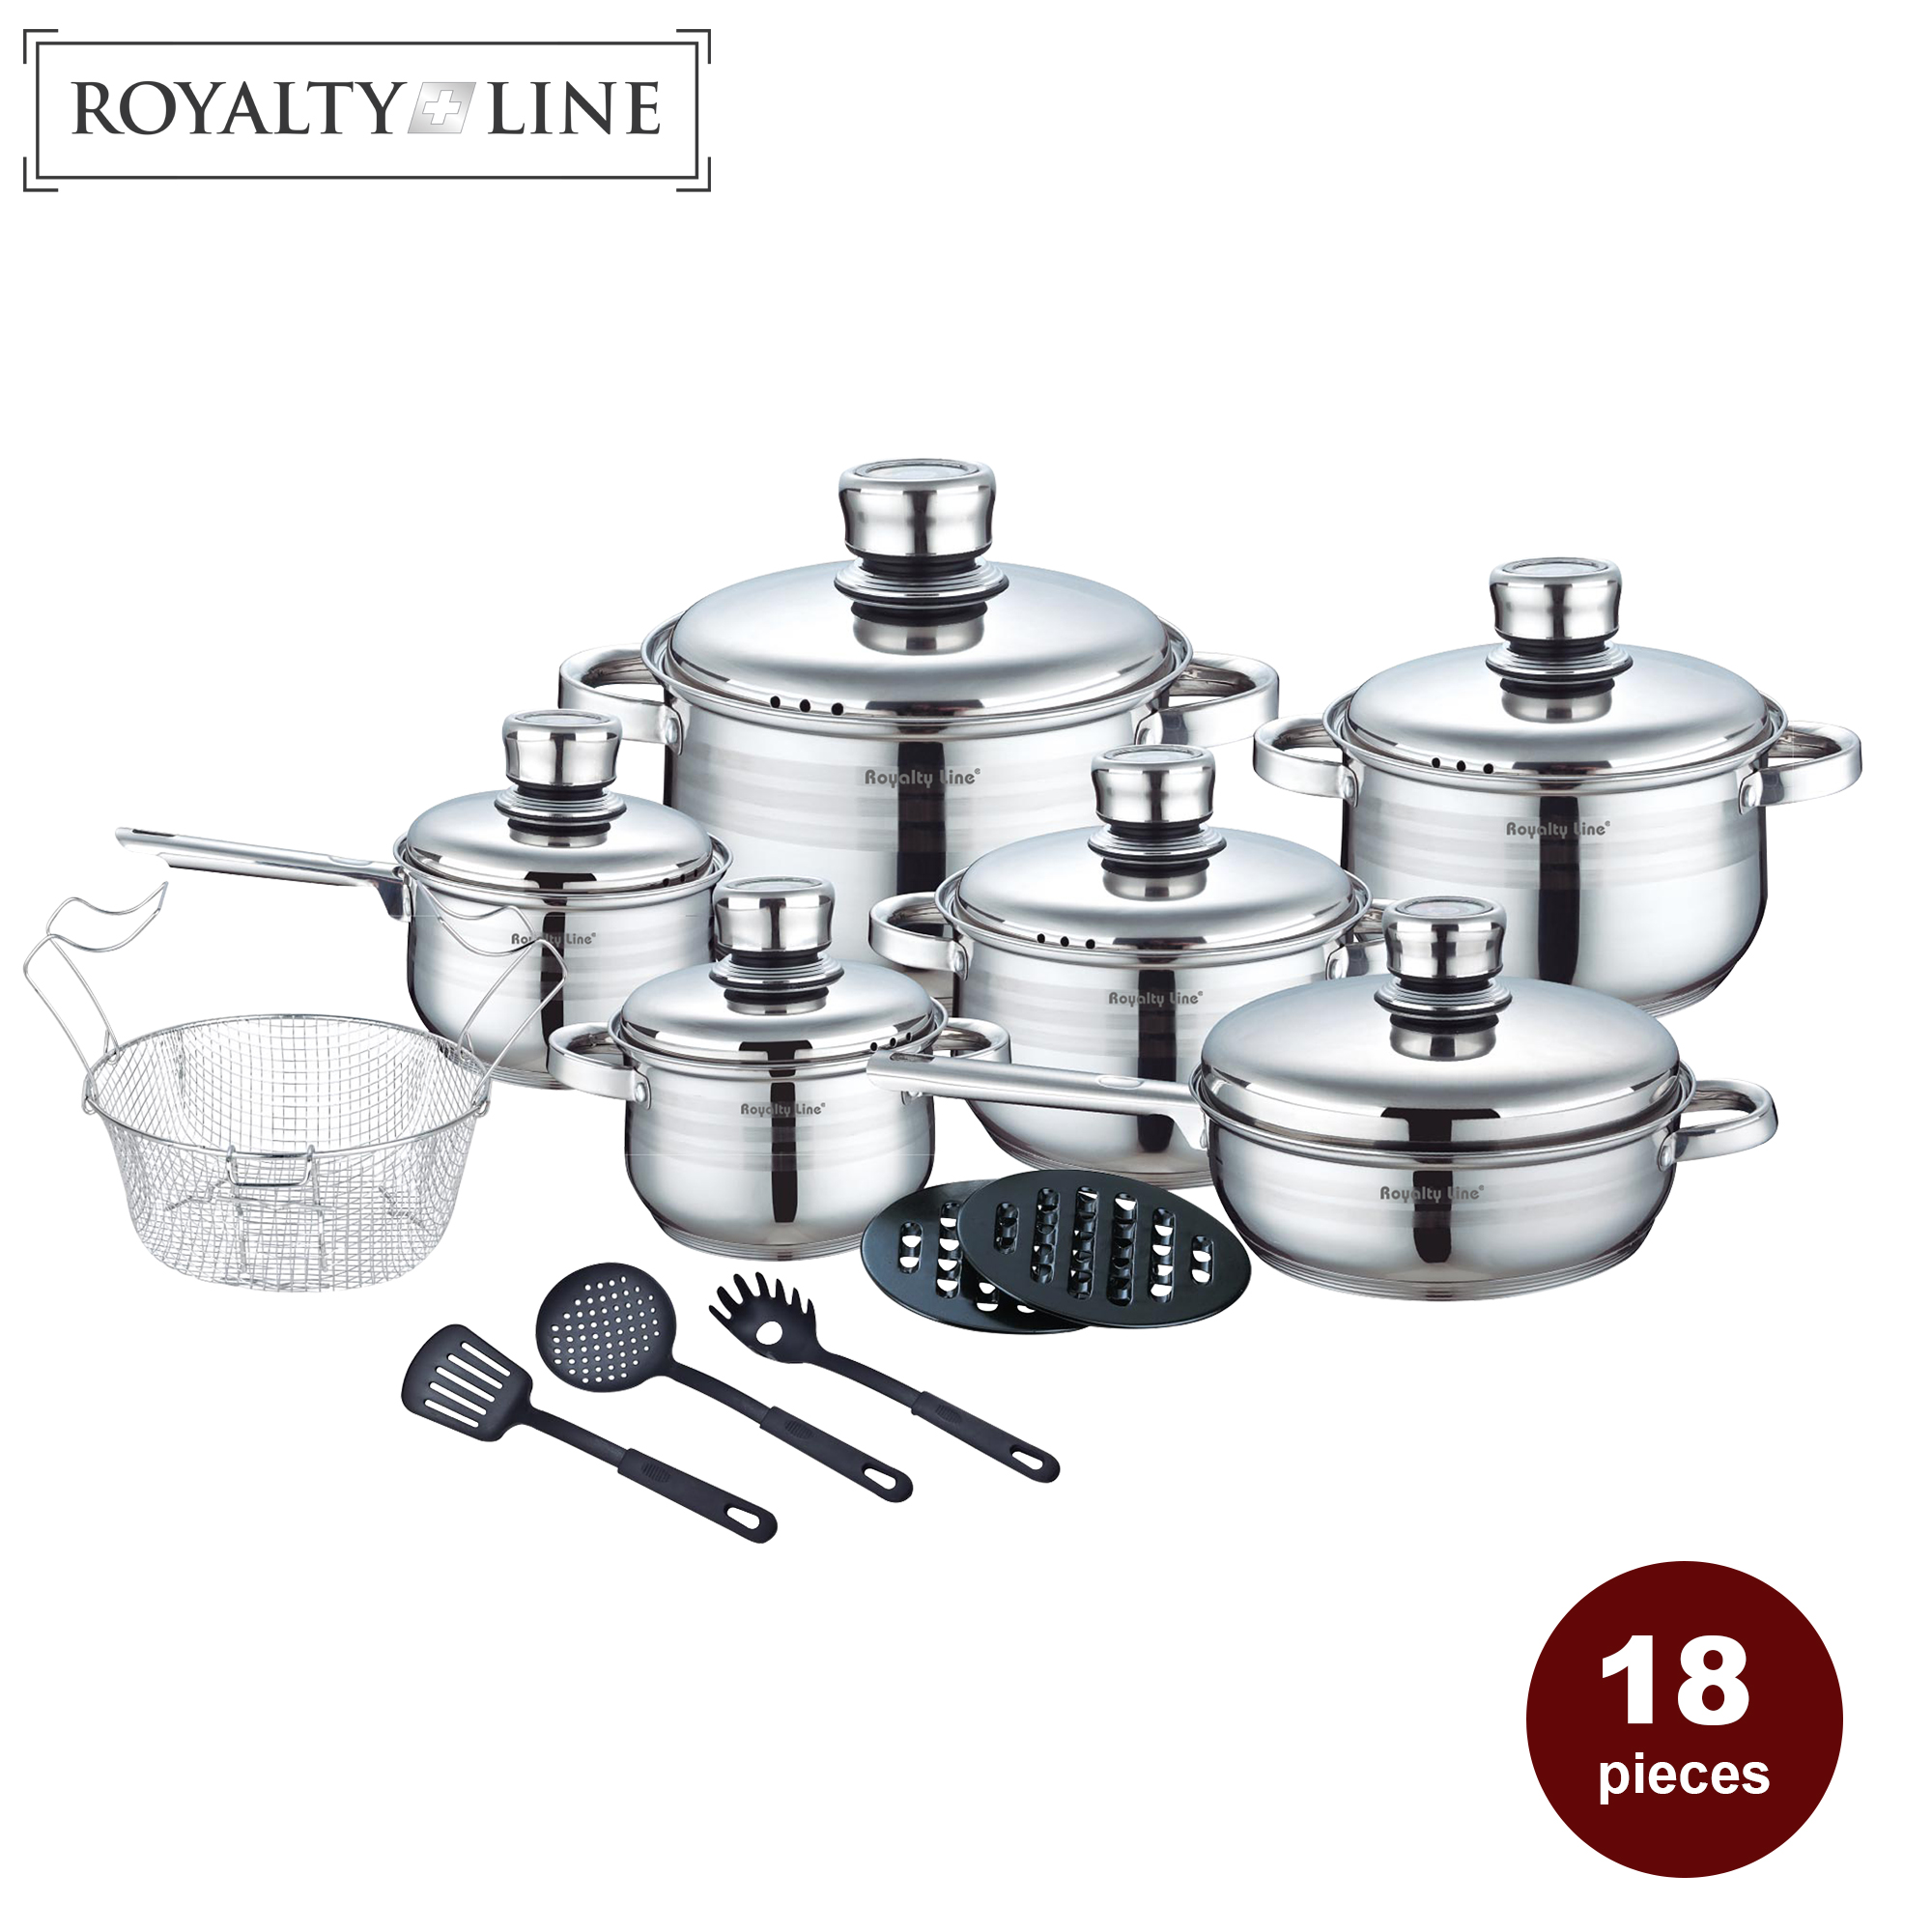 Royalty Line RL-1802; Pentolame in acciaio inox, Utensili da cucina, 18 pezzi